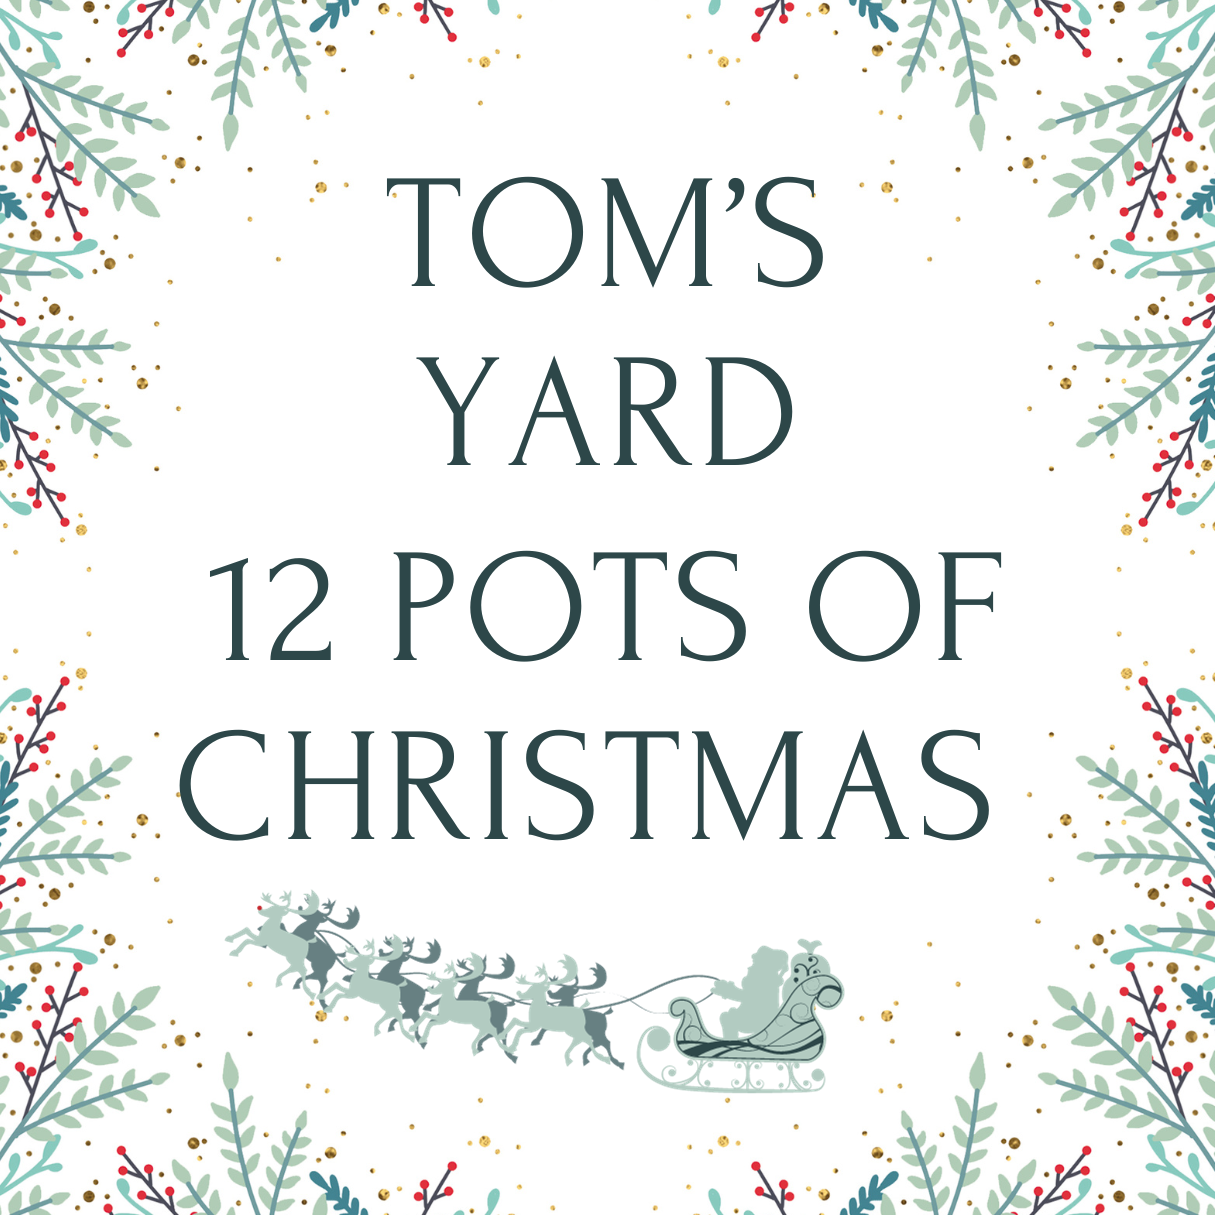 The Tom's Yard 12 Pots of Christmas Sale Begins